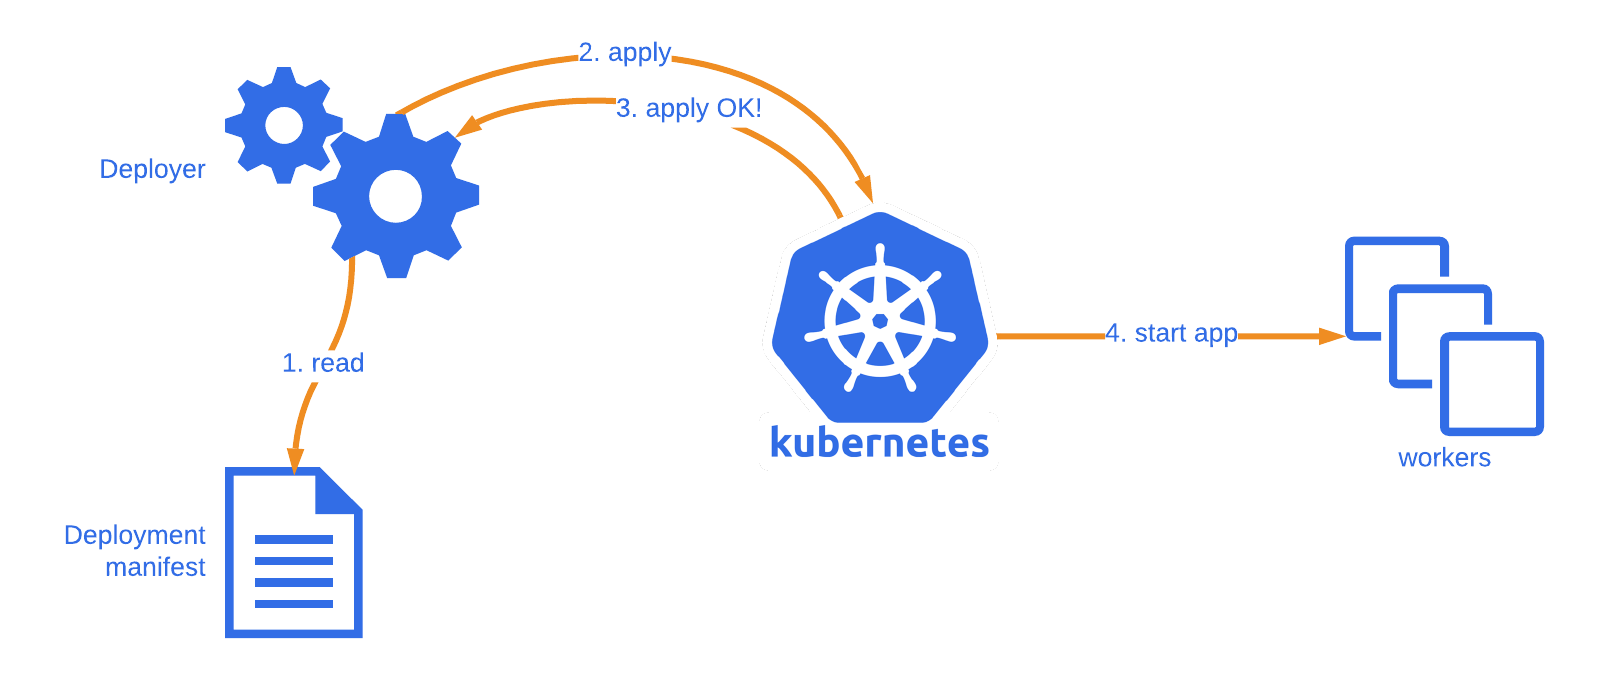 OpenSource 为Kubernetes提供云服务支持